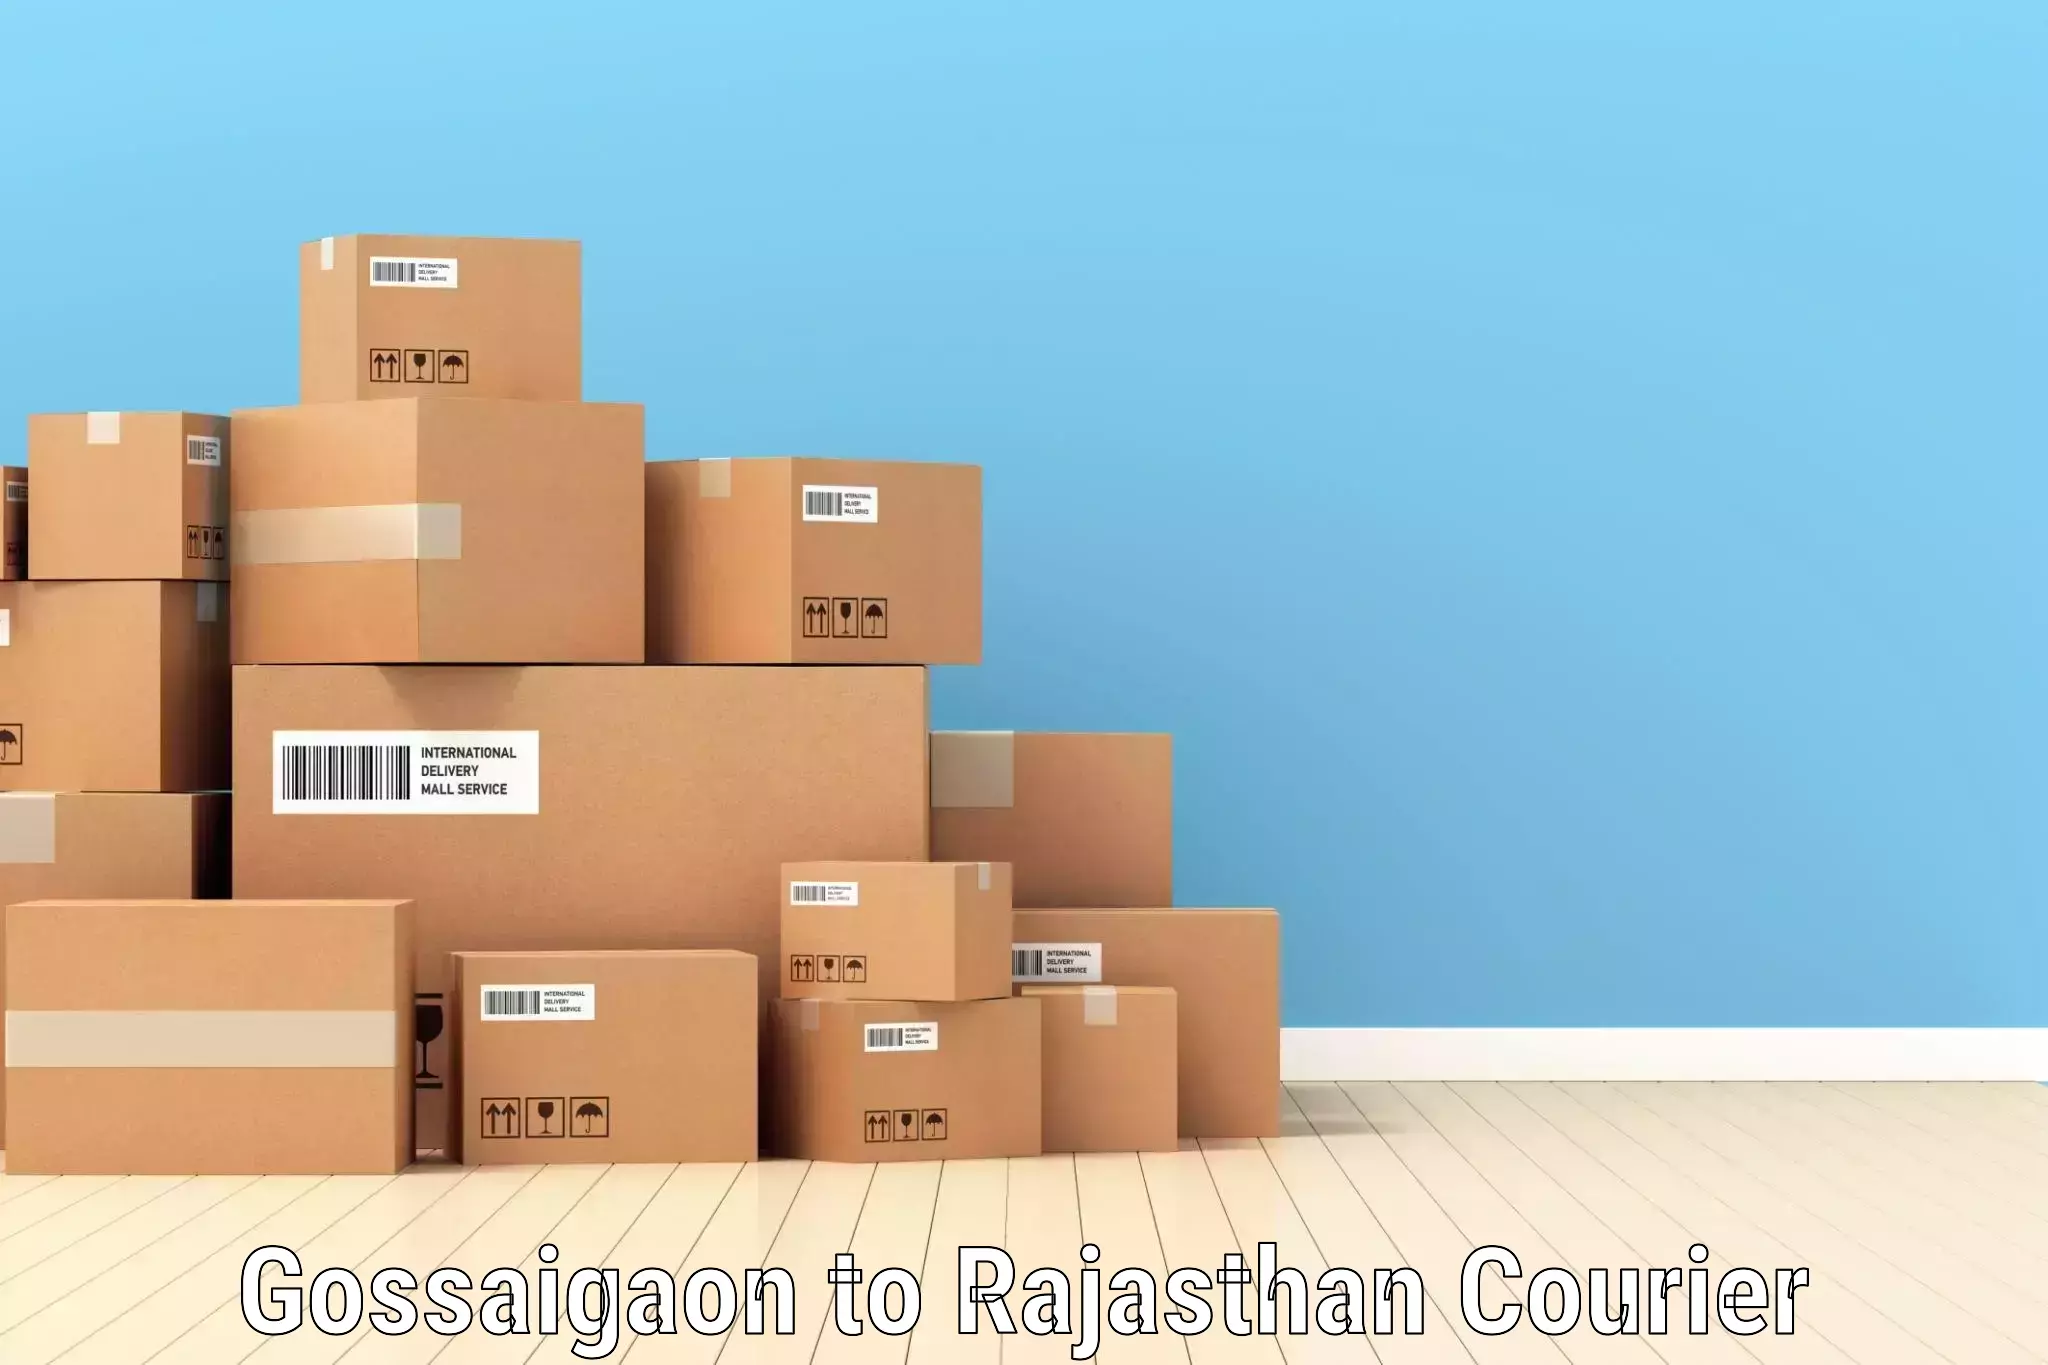 Efficient parcel tracking Gossaigaon to Nokha